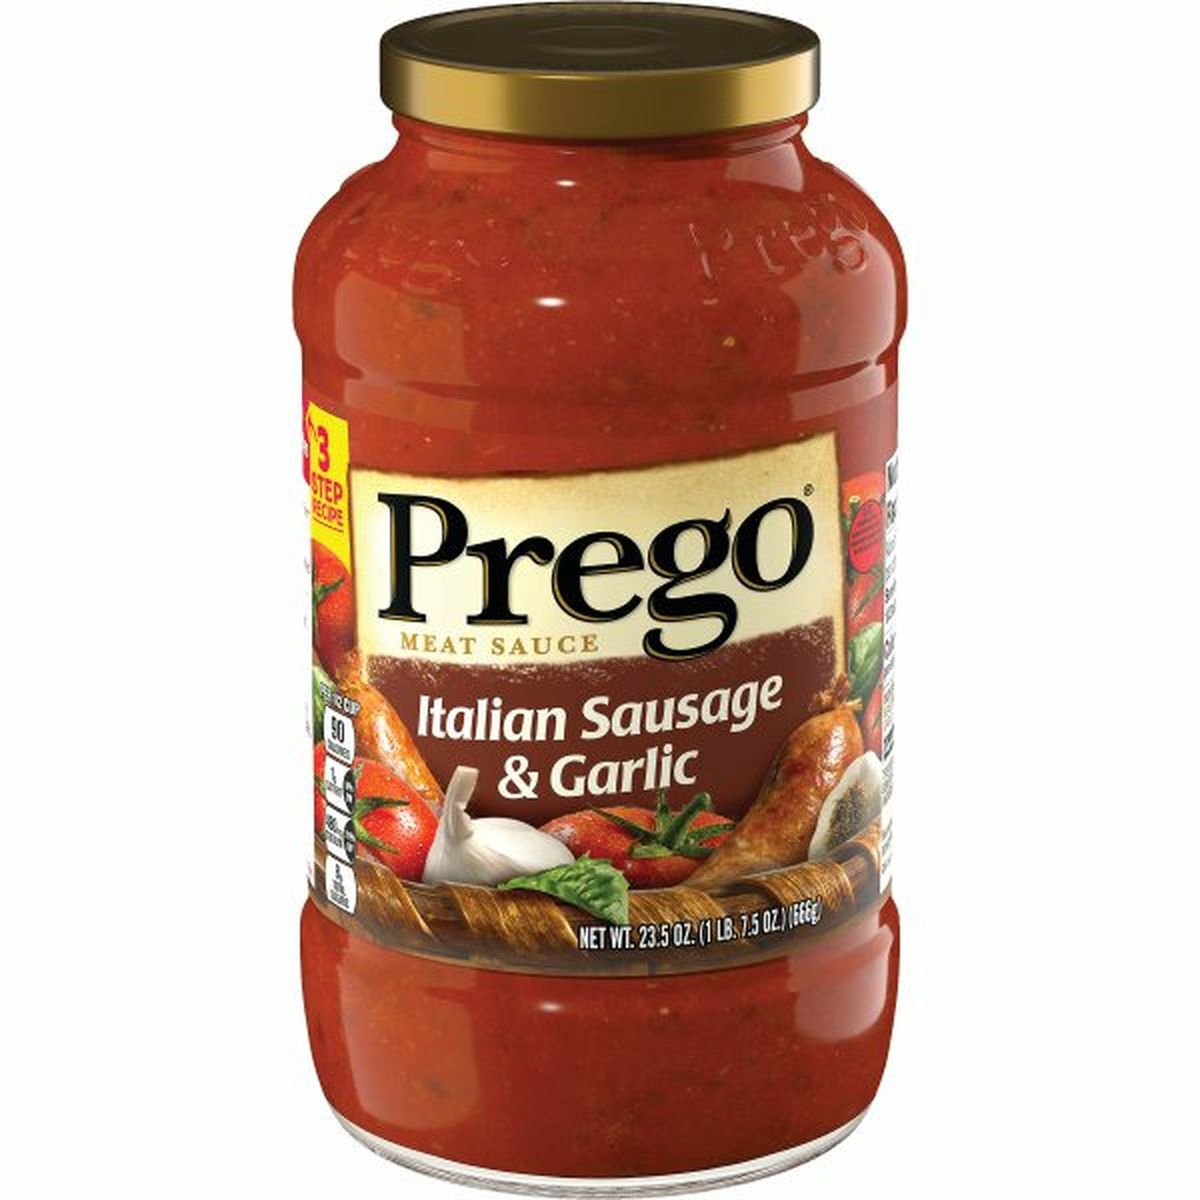 Calories in Pregos Italian Sausage & Garlic Meat Sauce